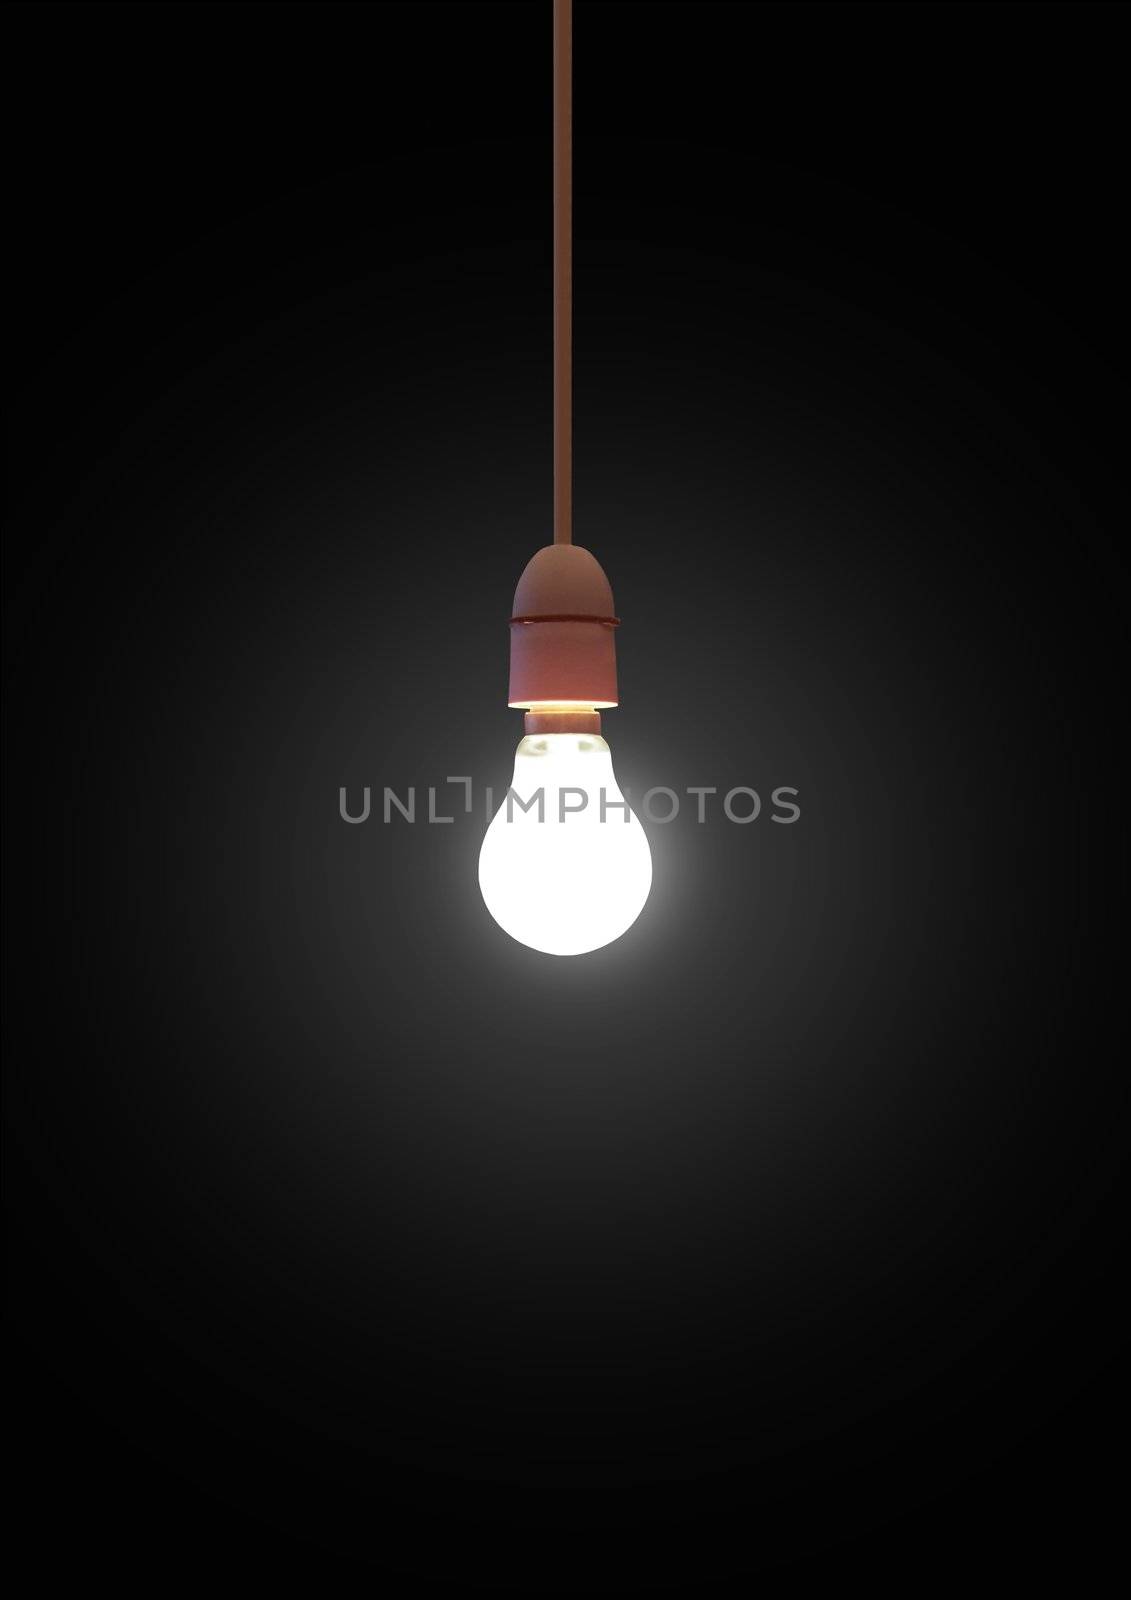 Hanging light-bulb, photo and illustration mix